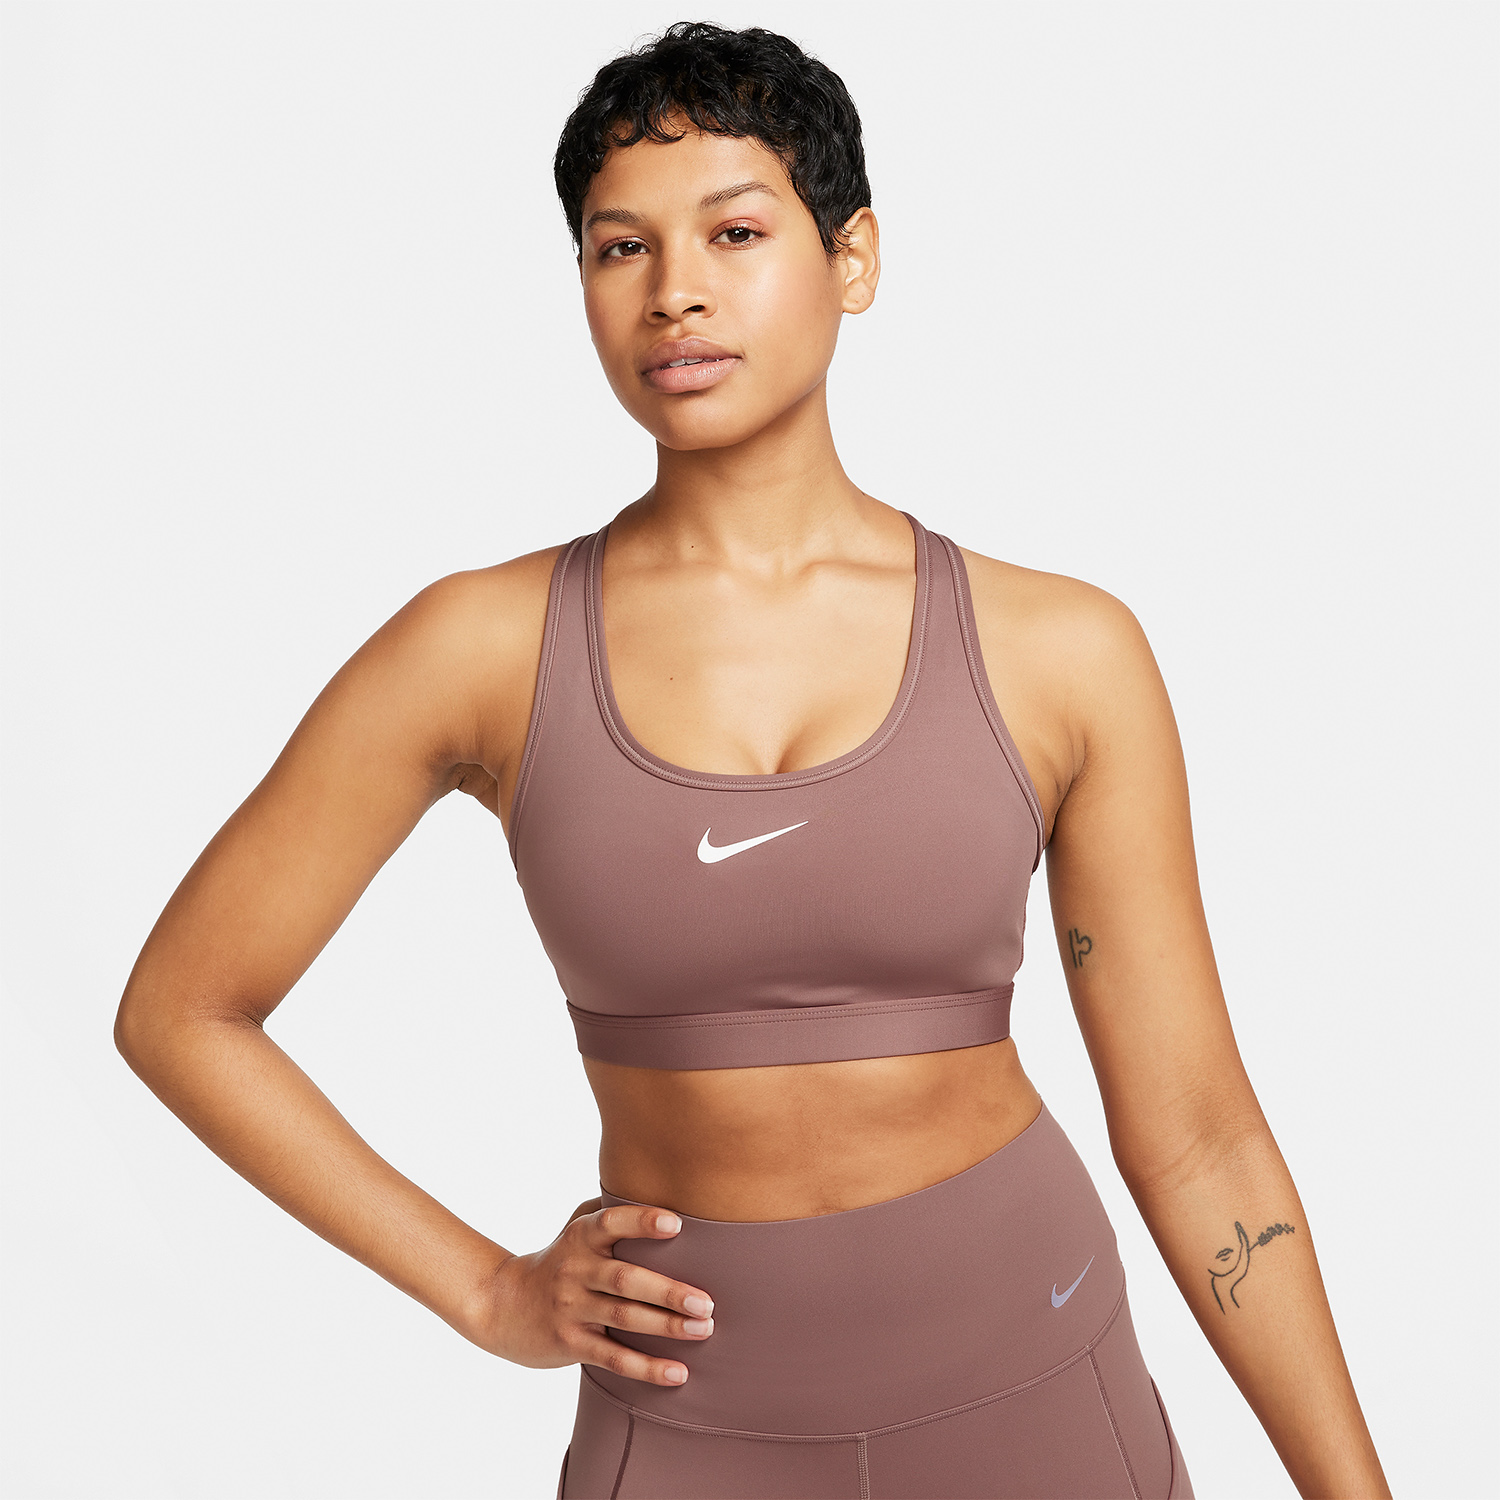 Nike Women's Swoosh Futura Sports Bra (L, White)